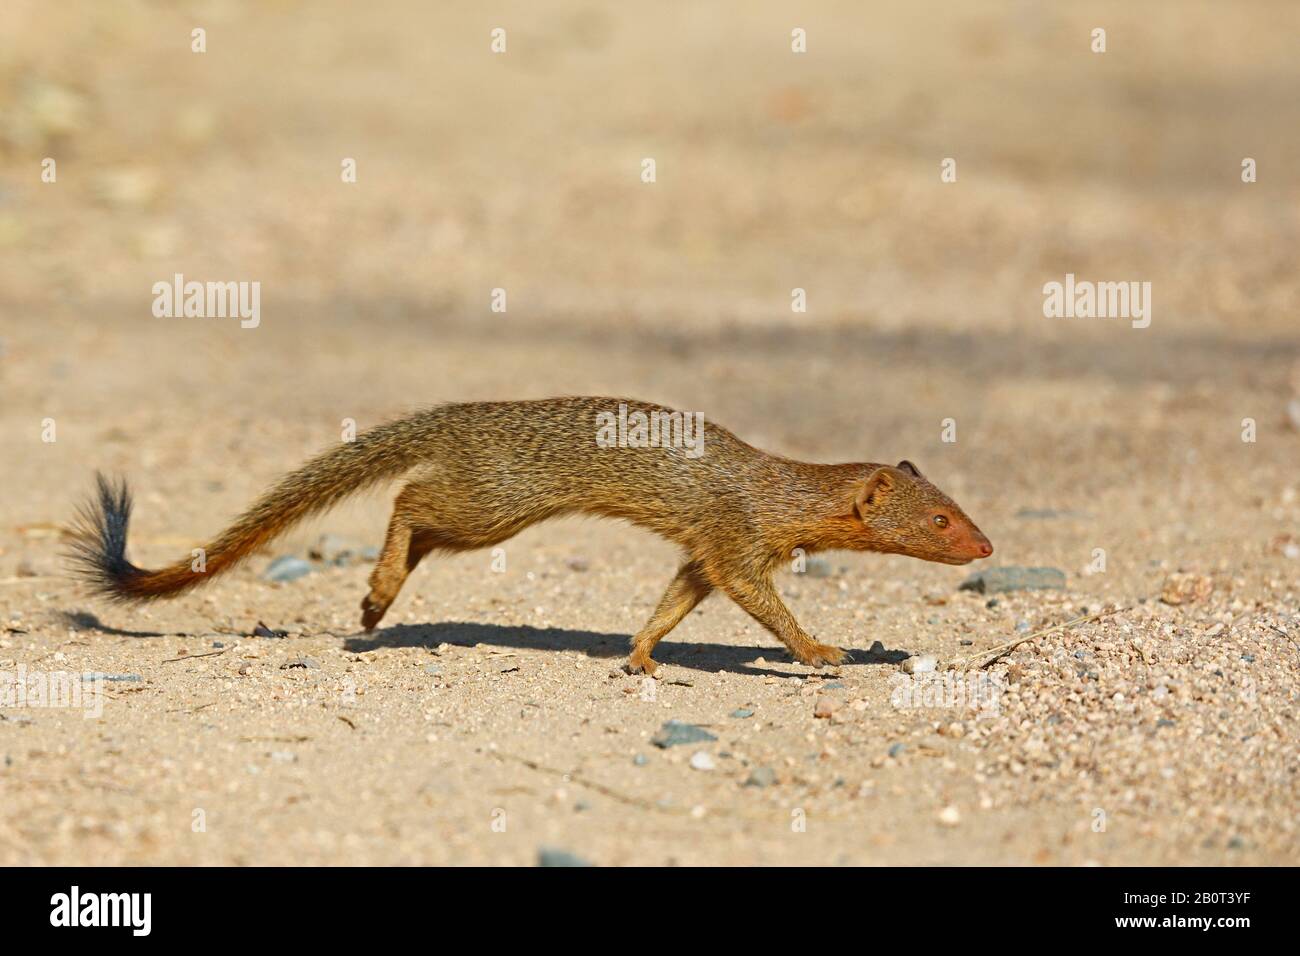 slender mongoose (Galerella sanguinea), walking on a track, side view, South Africa, Lowveld, Krueger National Park Stock Photo